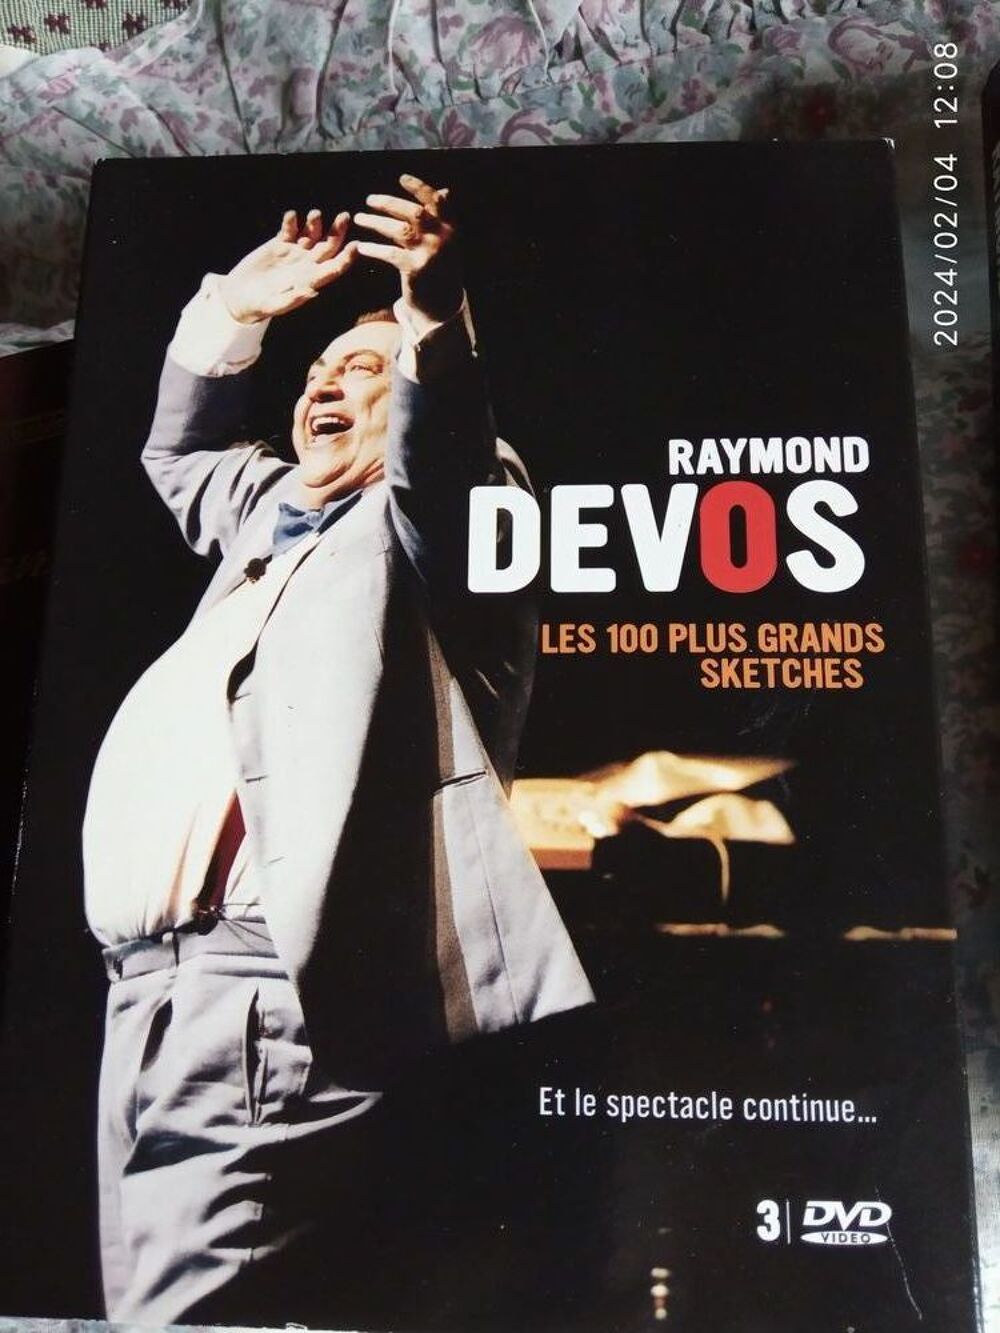 RAYMOND DEVOS en DVD DVD et blu-ray